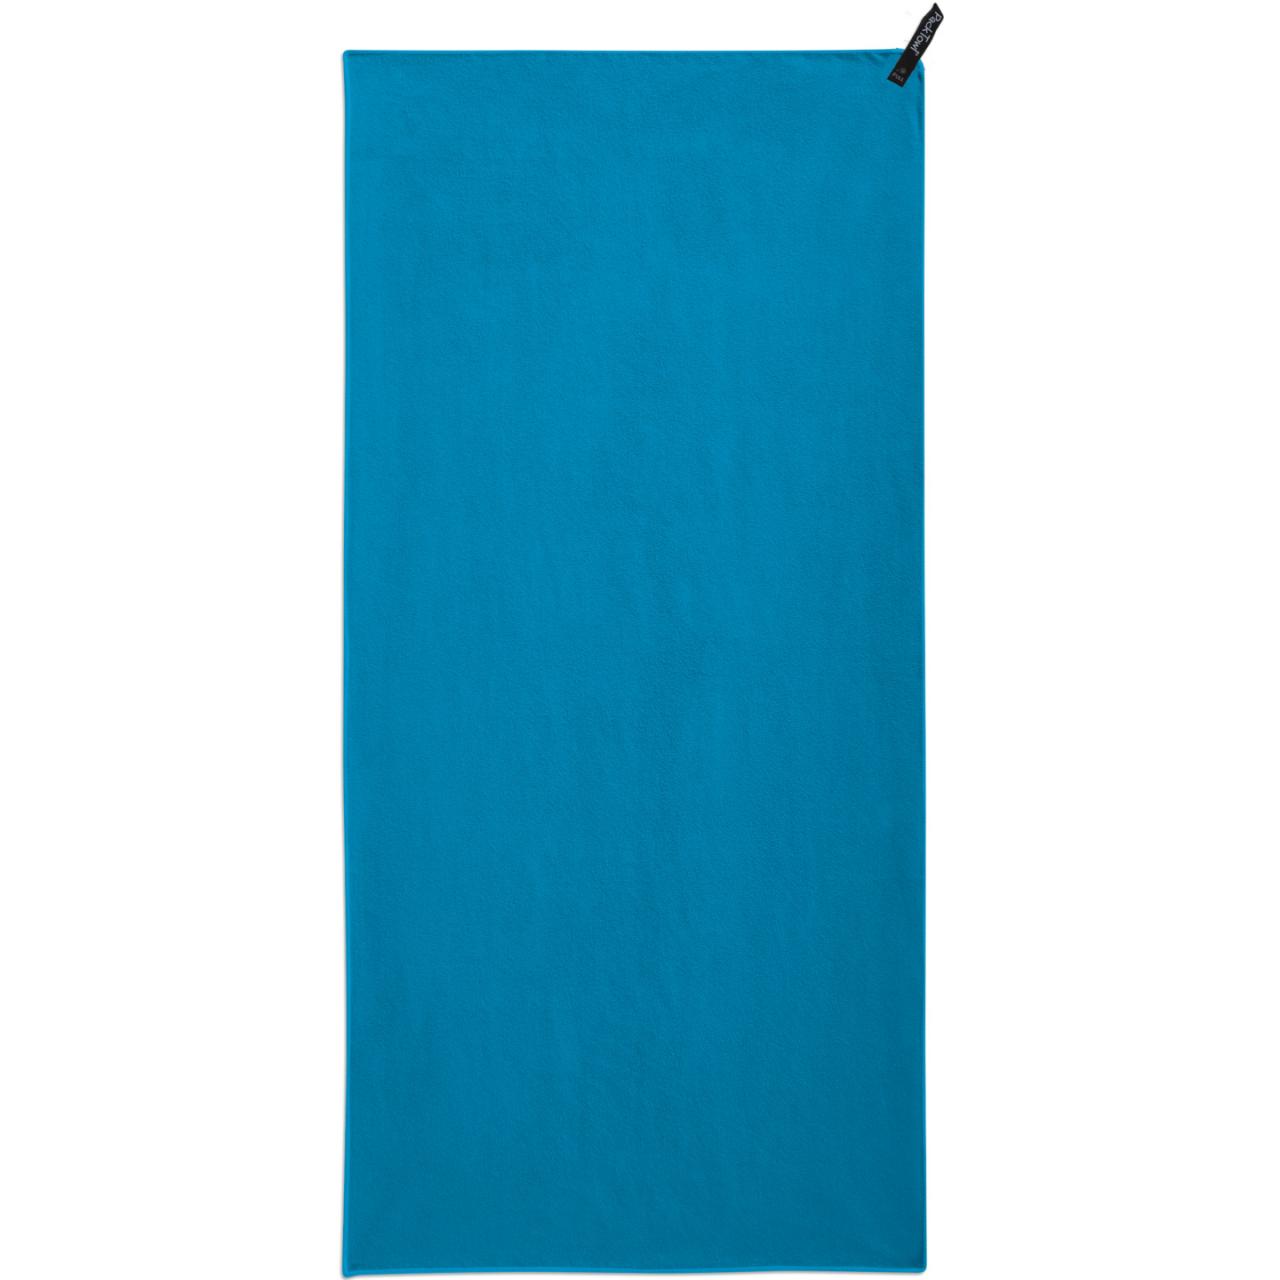 PACKTOWL PERSONAL BODY Lake Blue ručník 64x137cm modrý